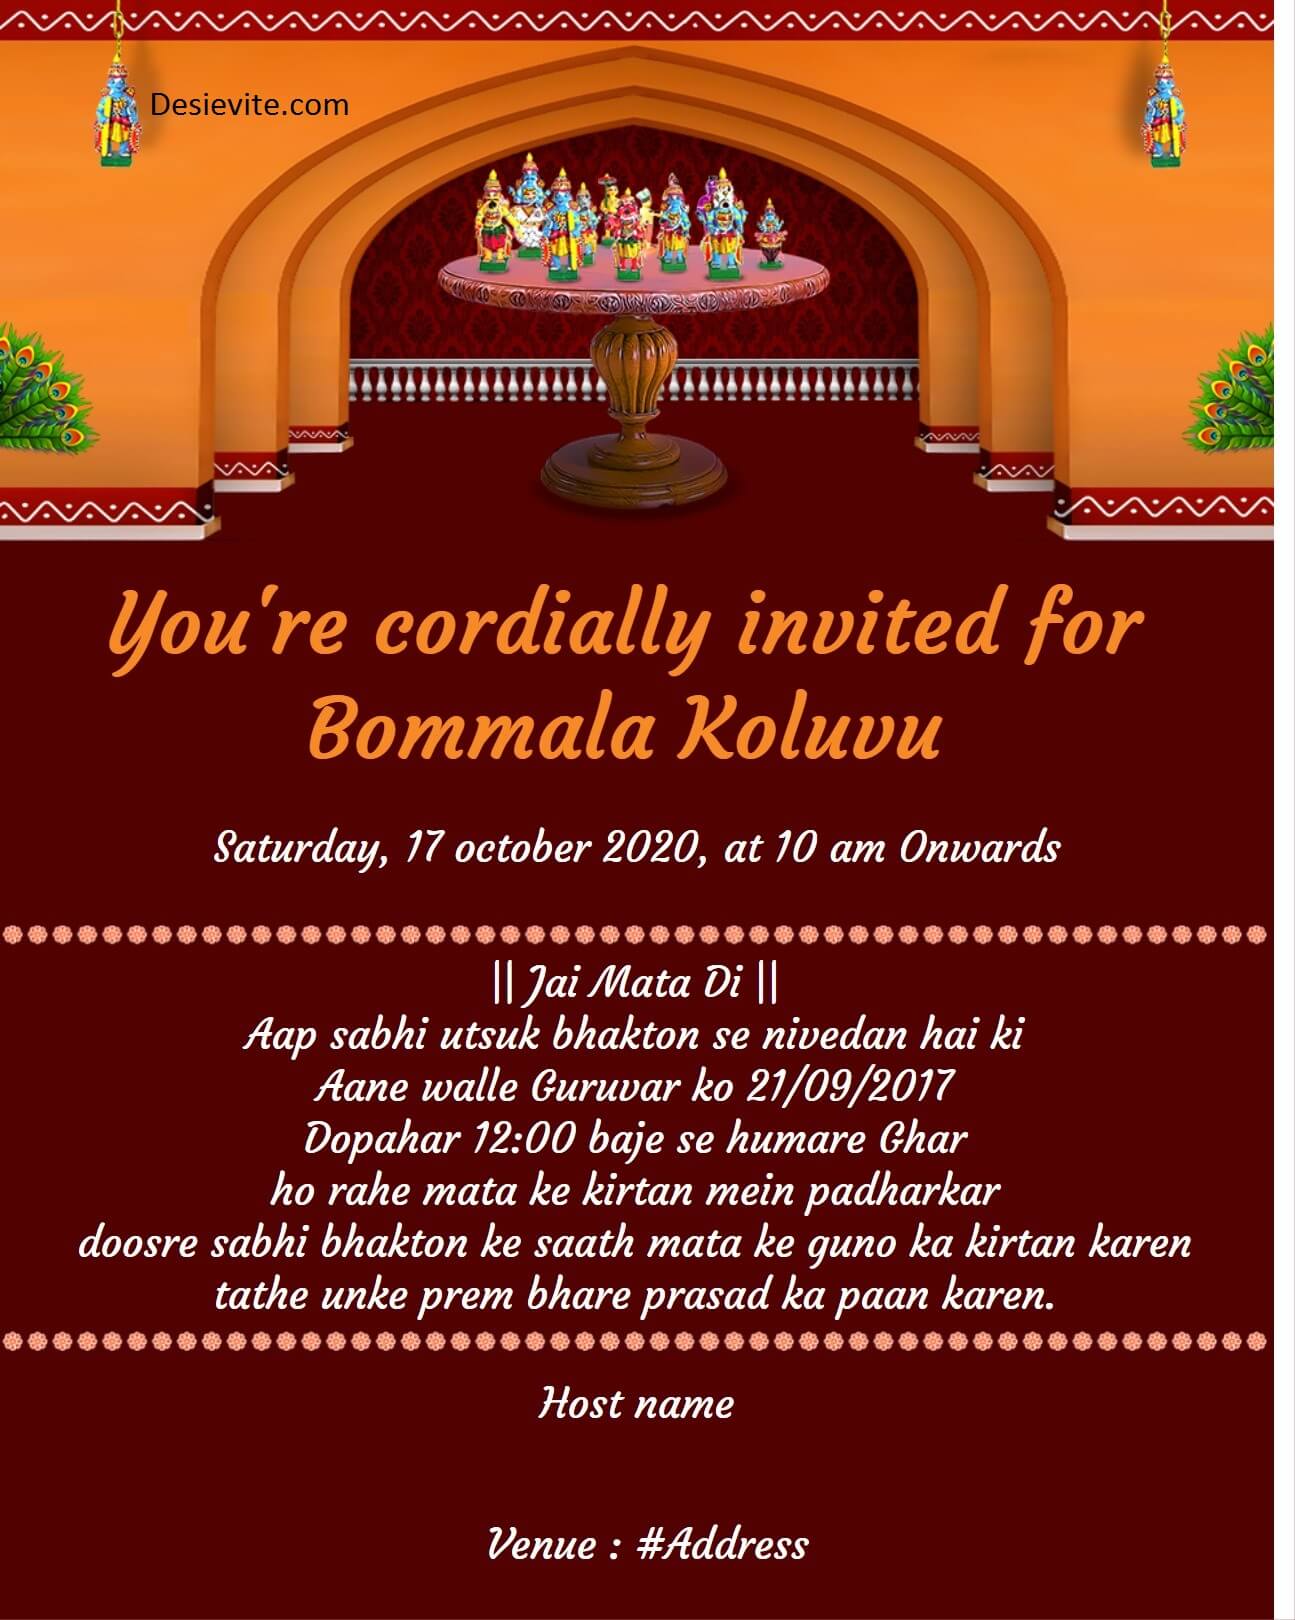 You're cordially invited for Bommala Koluvu